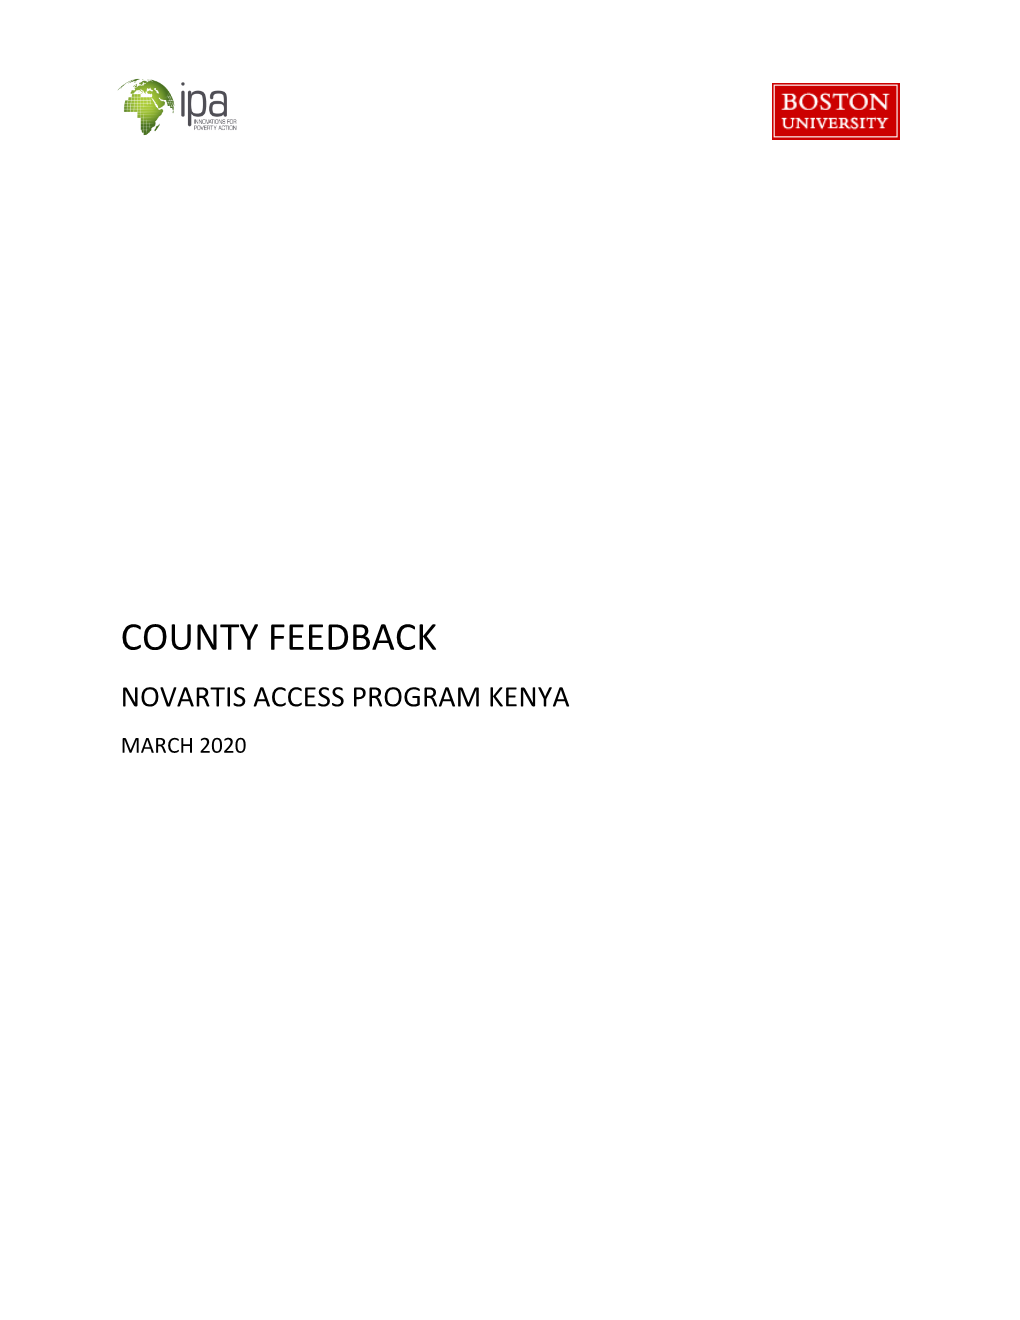 County Feedback Novartis Access Program Kenya March 2020